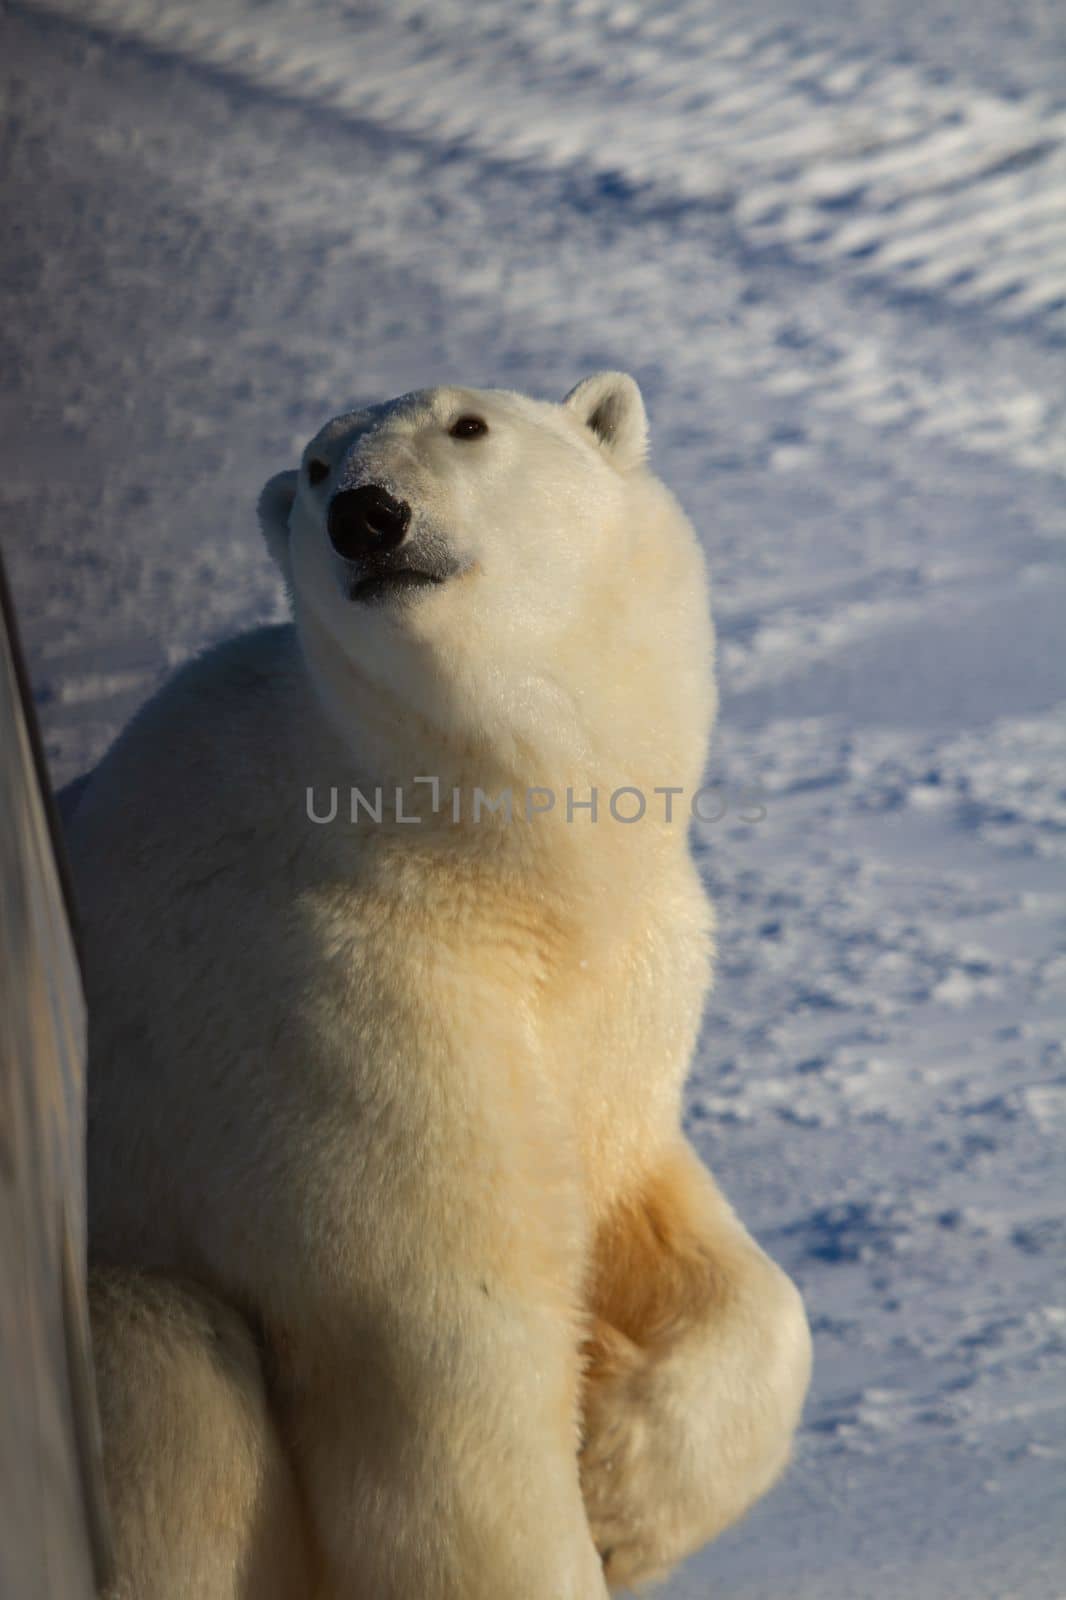 Closeup of a polar bear or ursus maritumus looking up, near Churchill, Manitoba Canada by Granchinho